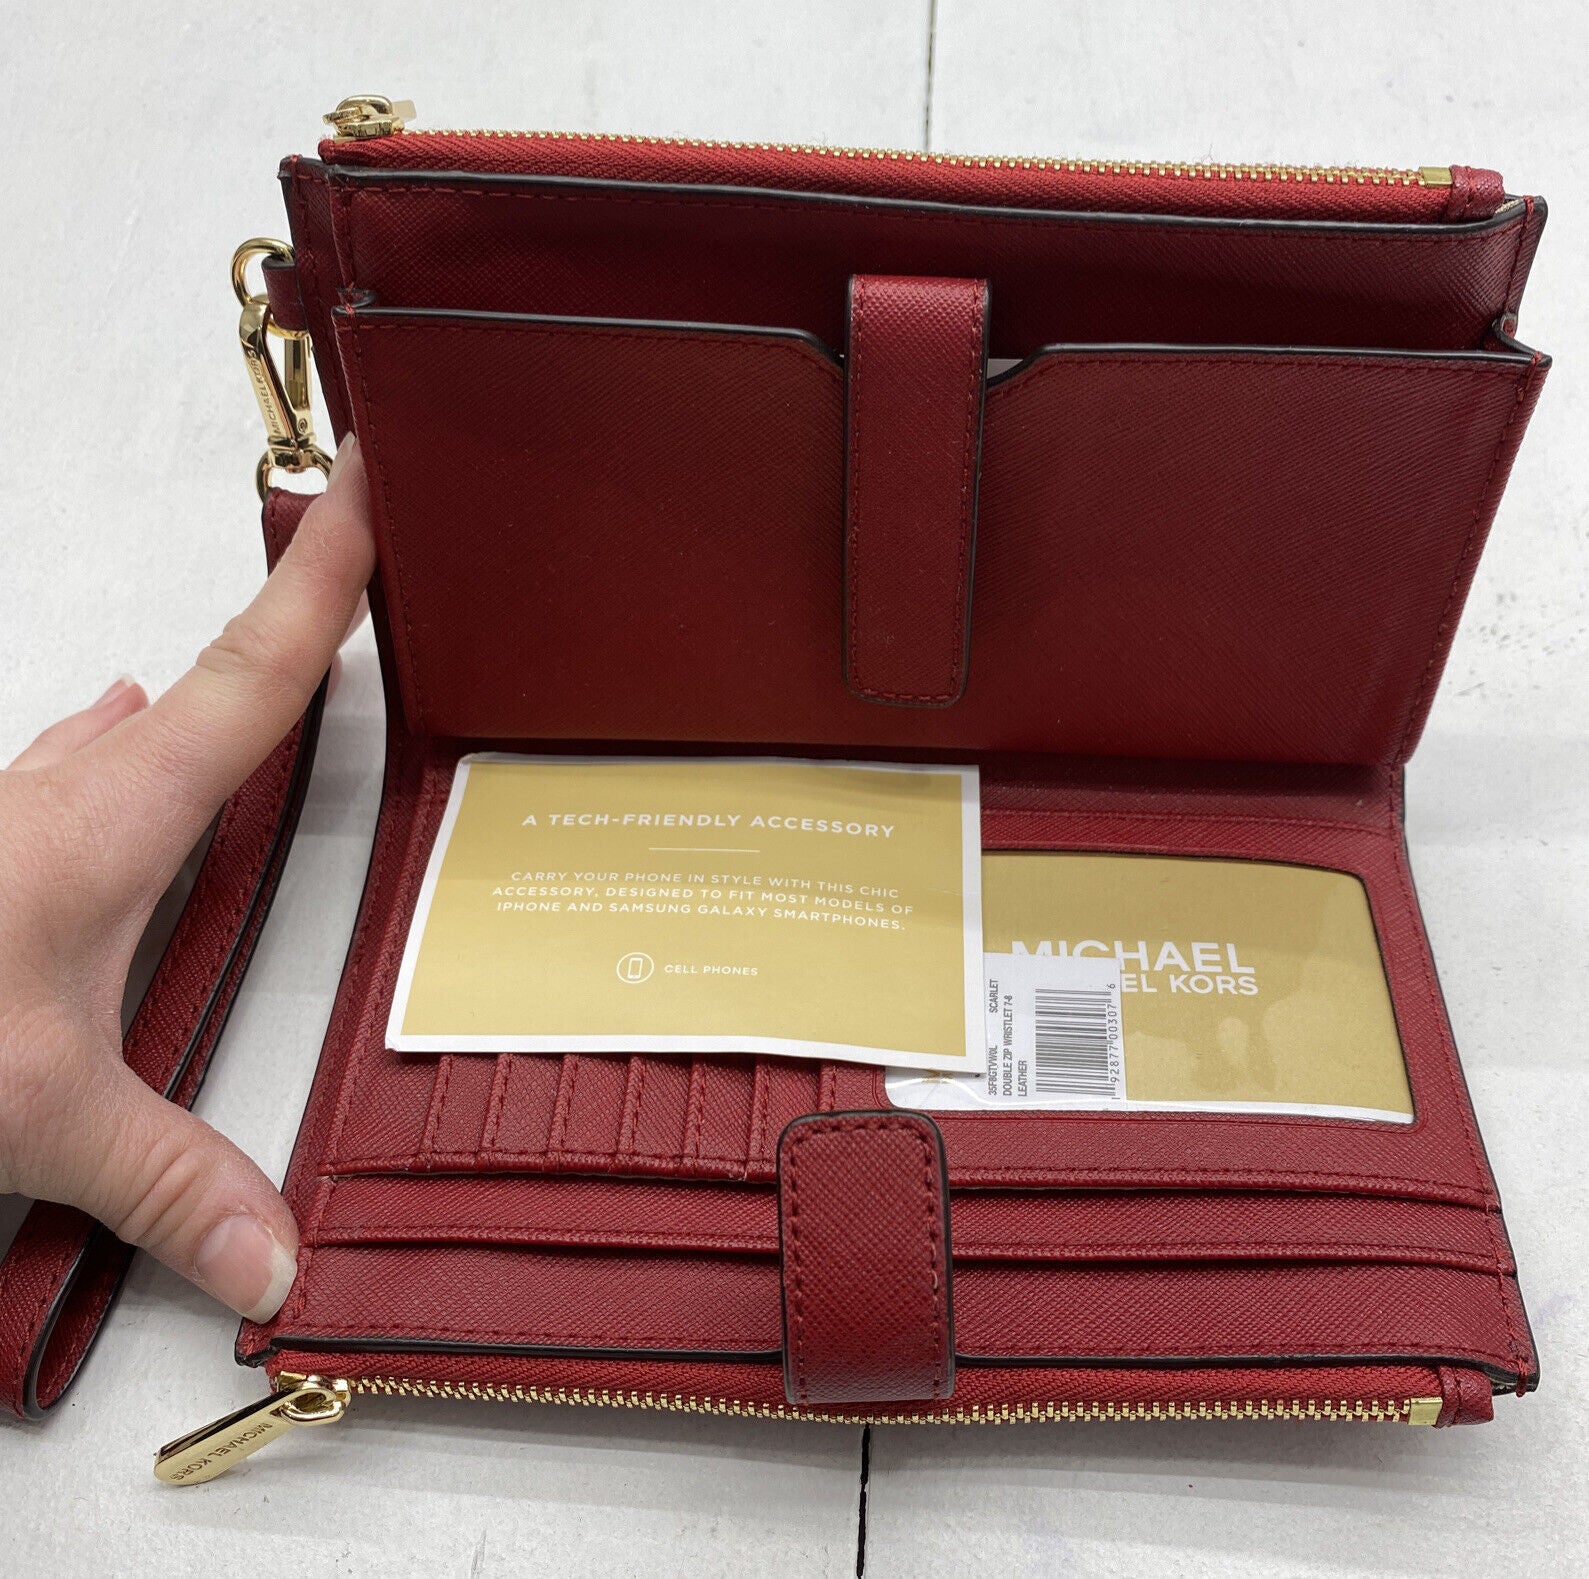 Michael Kors Women's Jet Set Travel Leather Wristlet Wallet